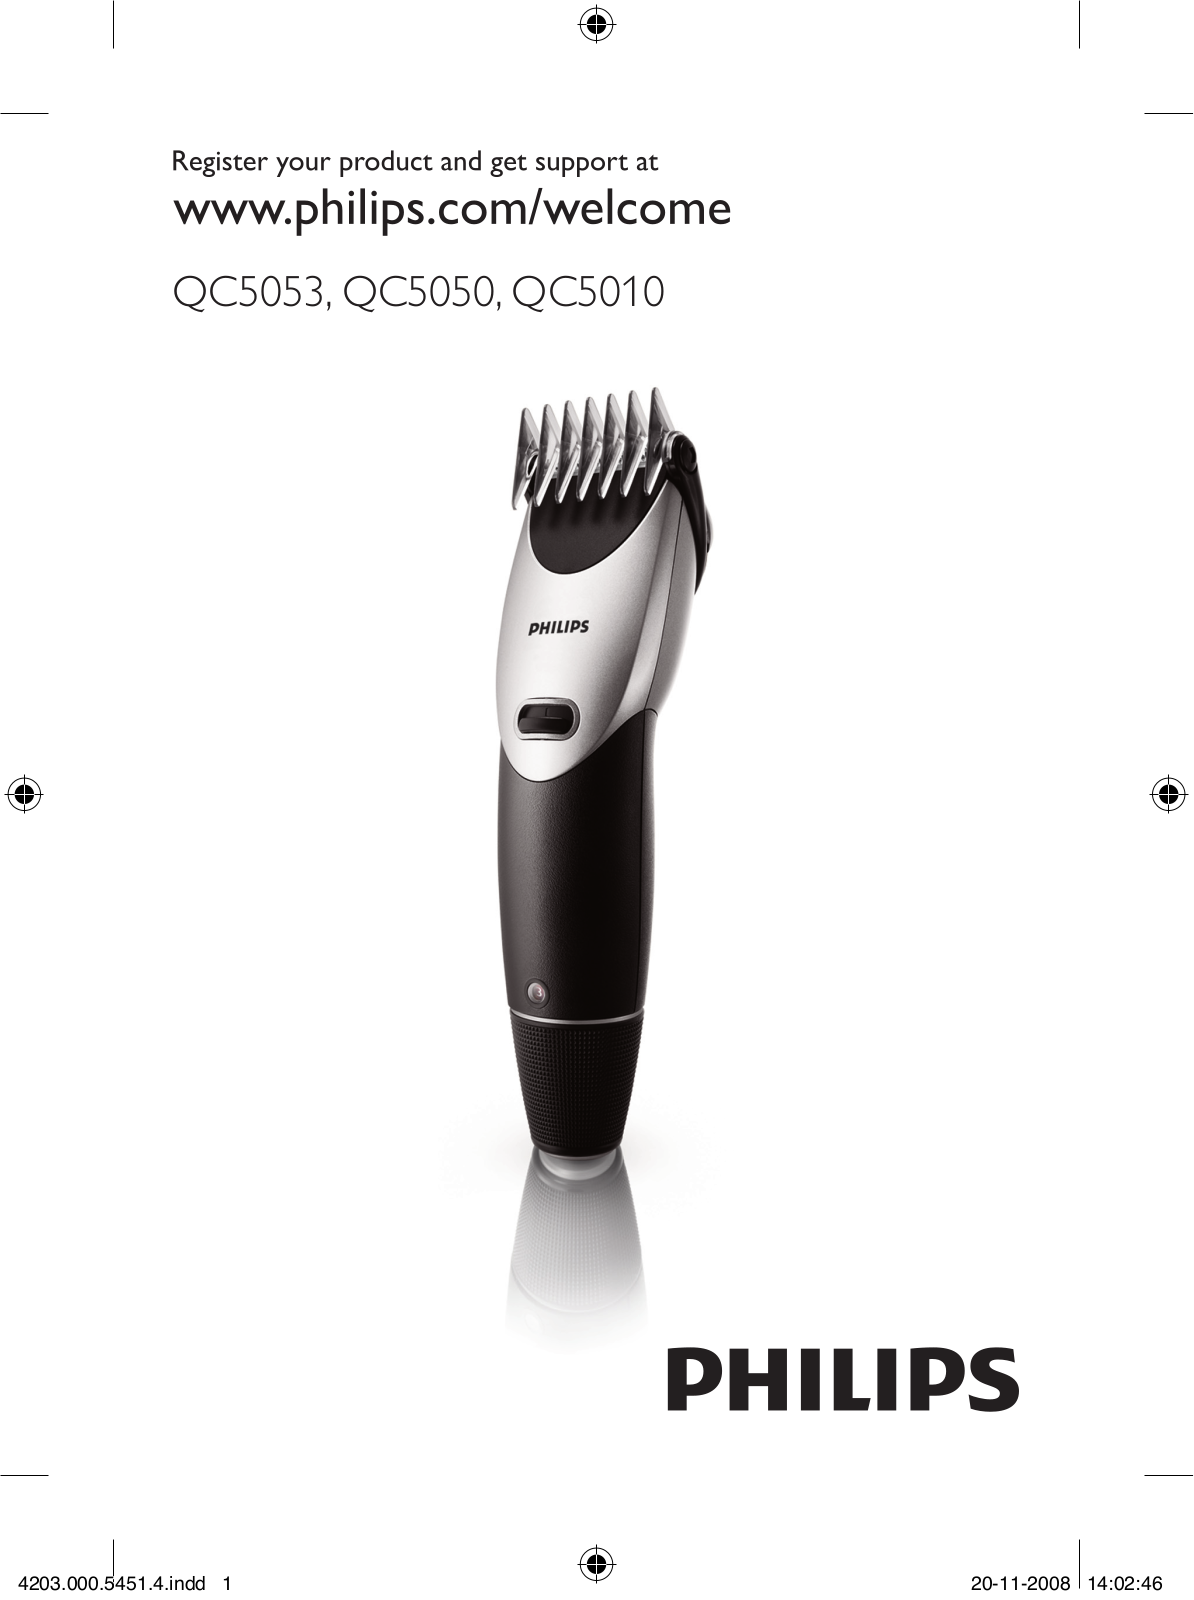 Philips Tondeuse cheveux User Manual